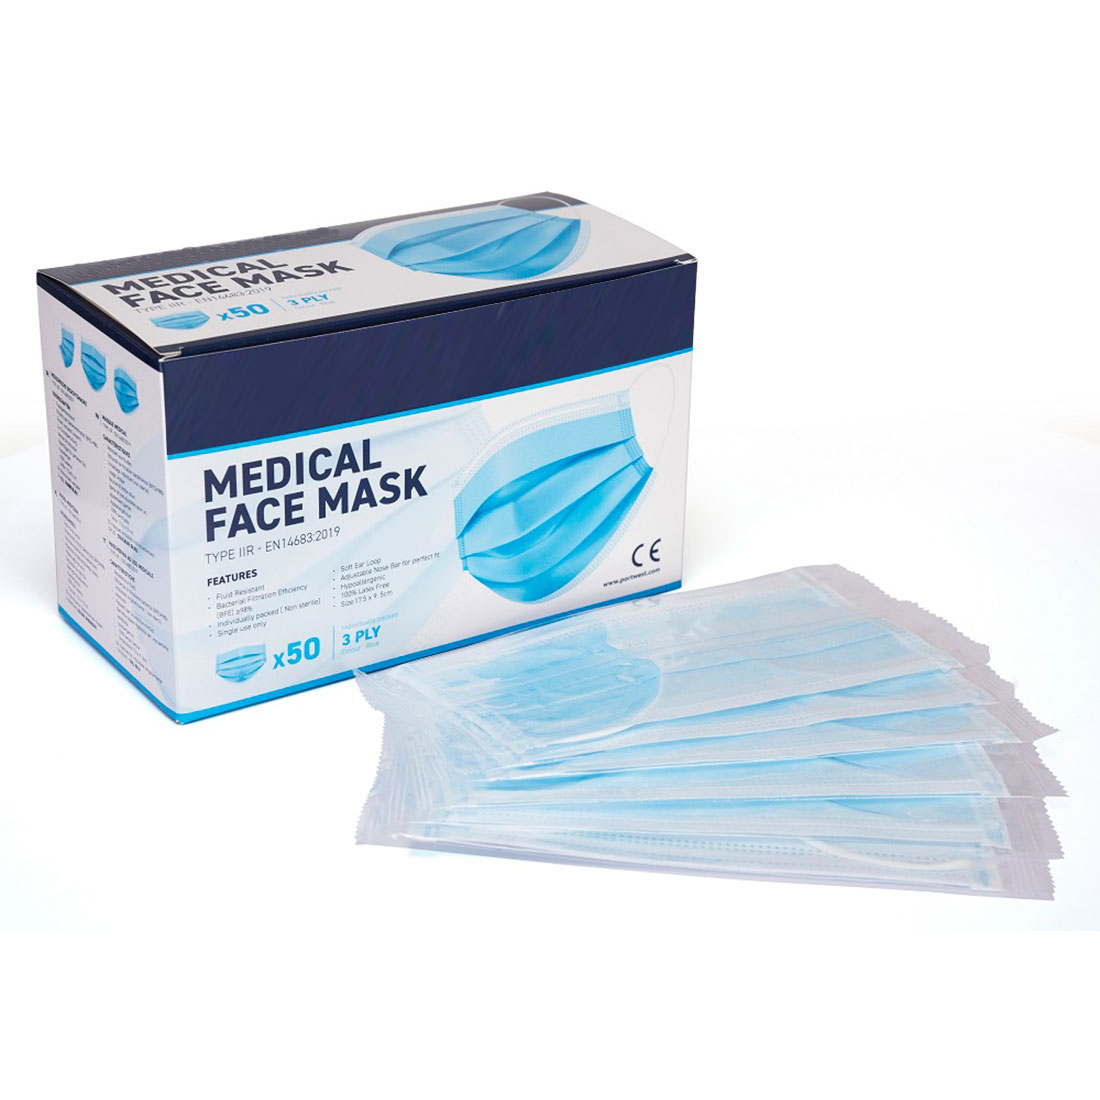 Medical Mask Type IIR (Individually Wrapped)